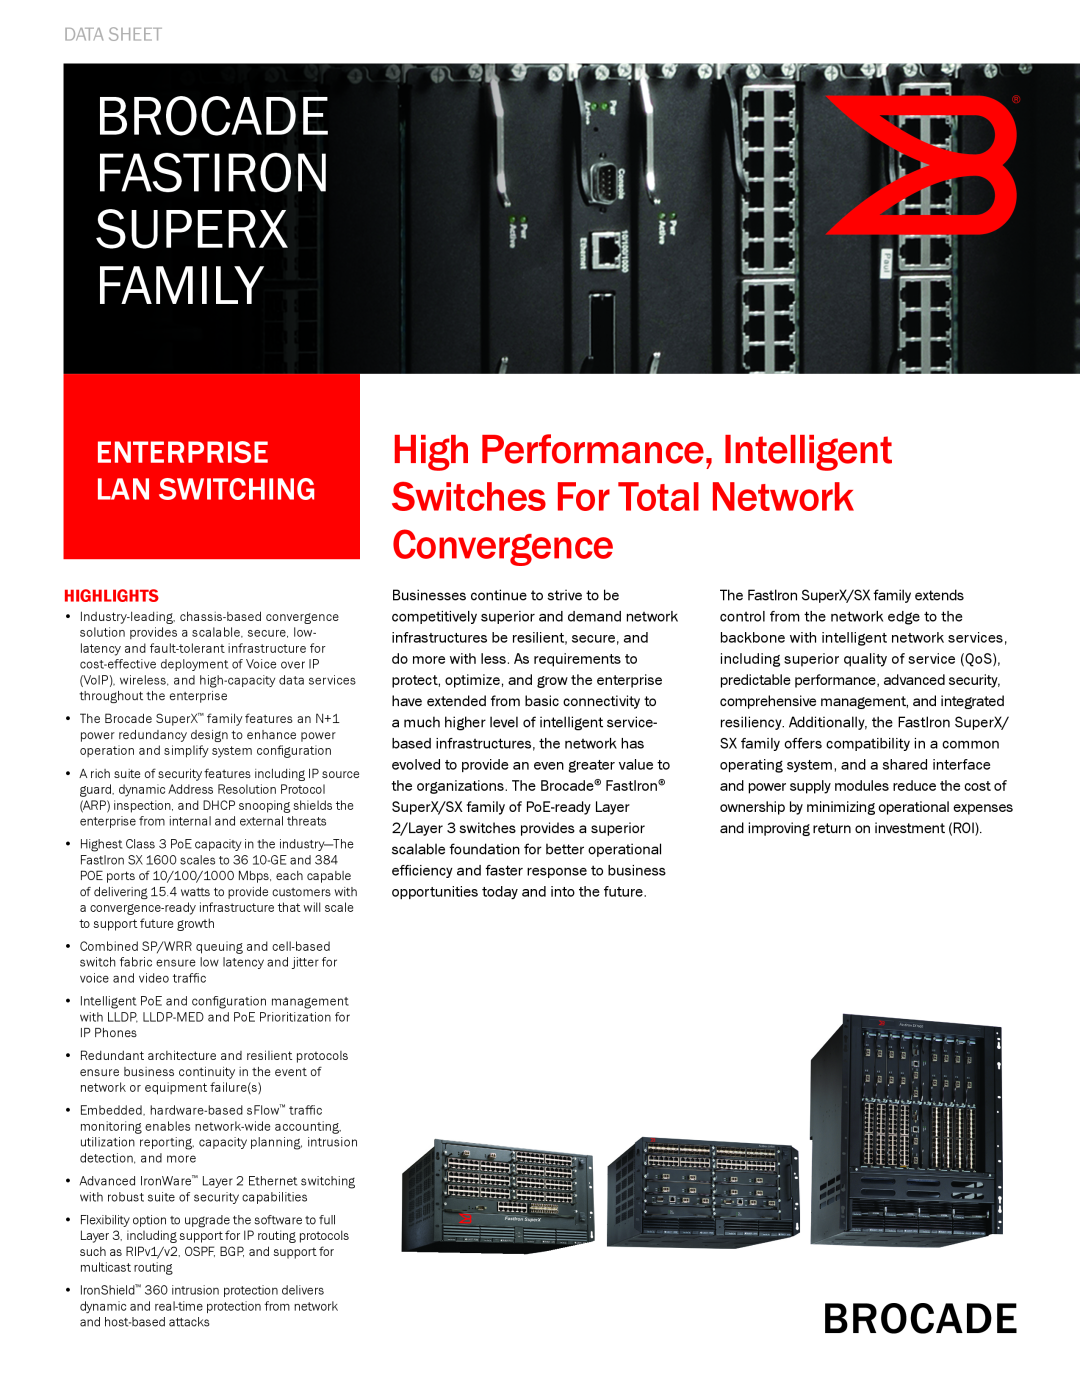 Cisco Systems Superx Series manual Data Sheet, Highlights, BROCADE FASTIRON Superx Family, Enterprise LAN switching 